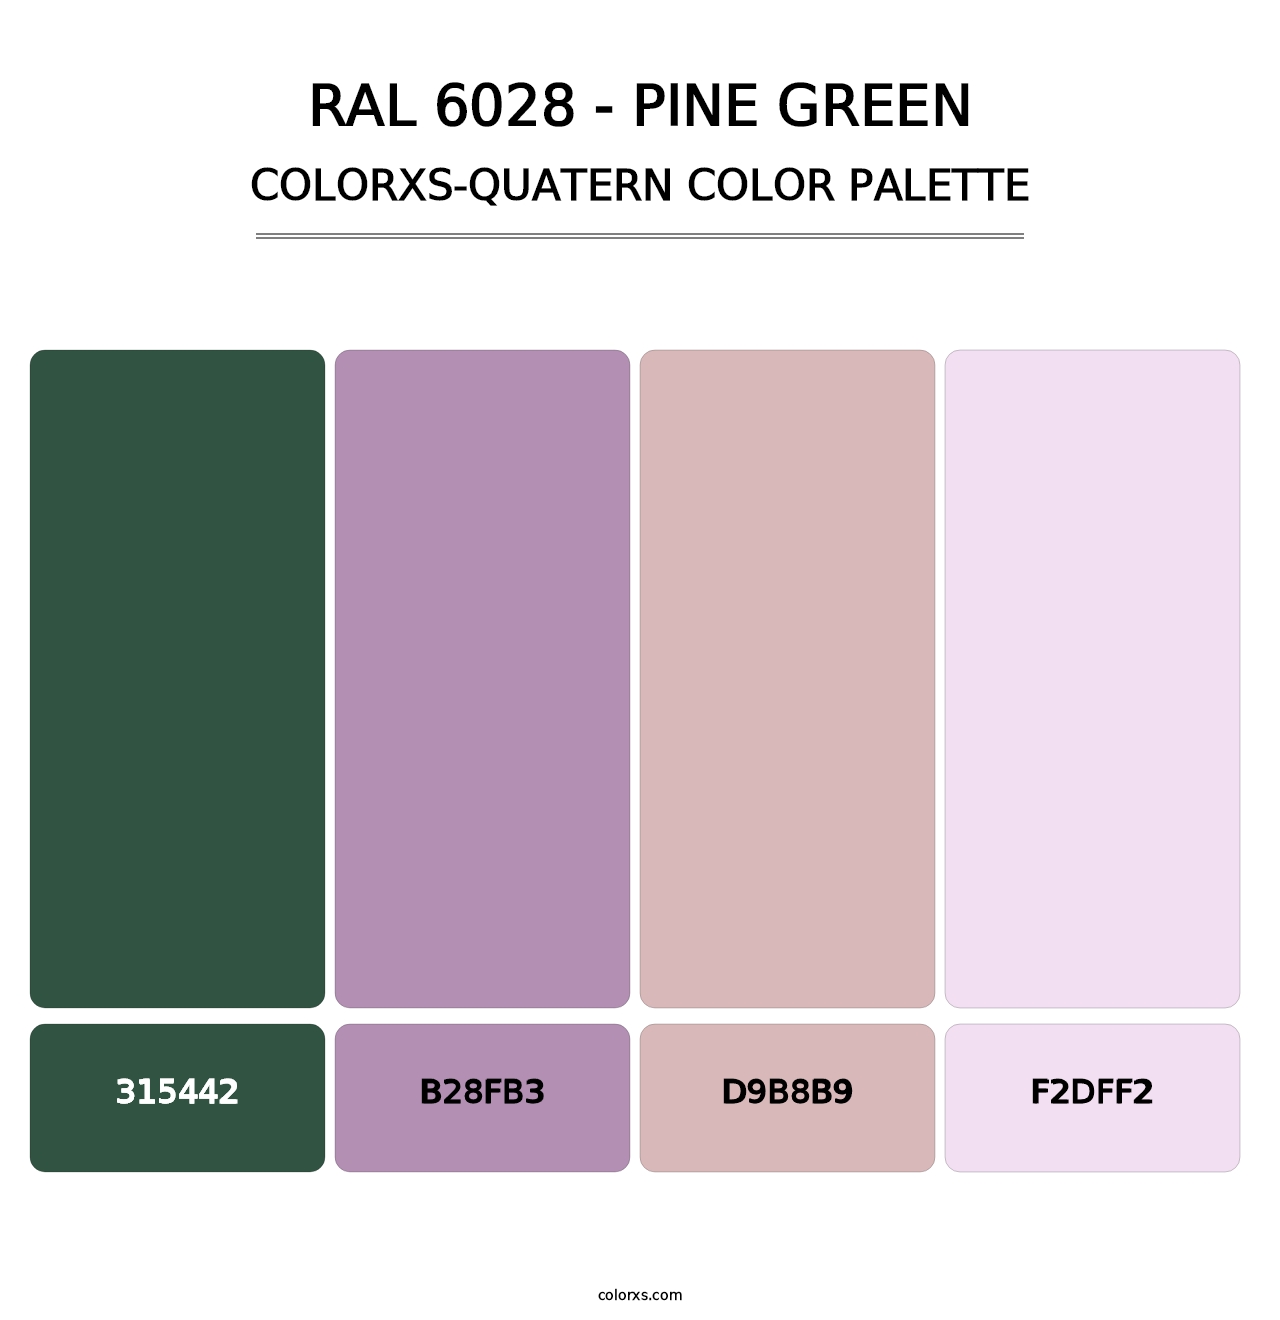 RAL 6028 - Pine Green - Colorxs Quatern Palette